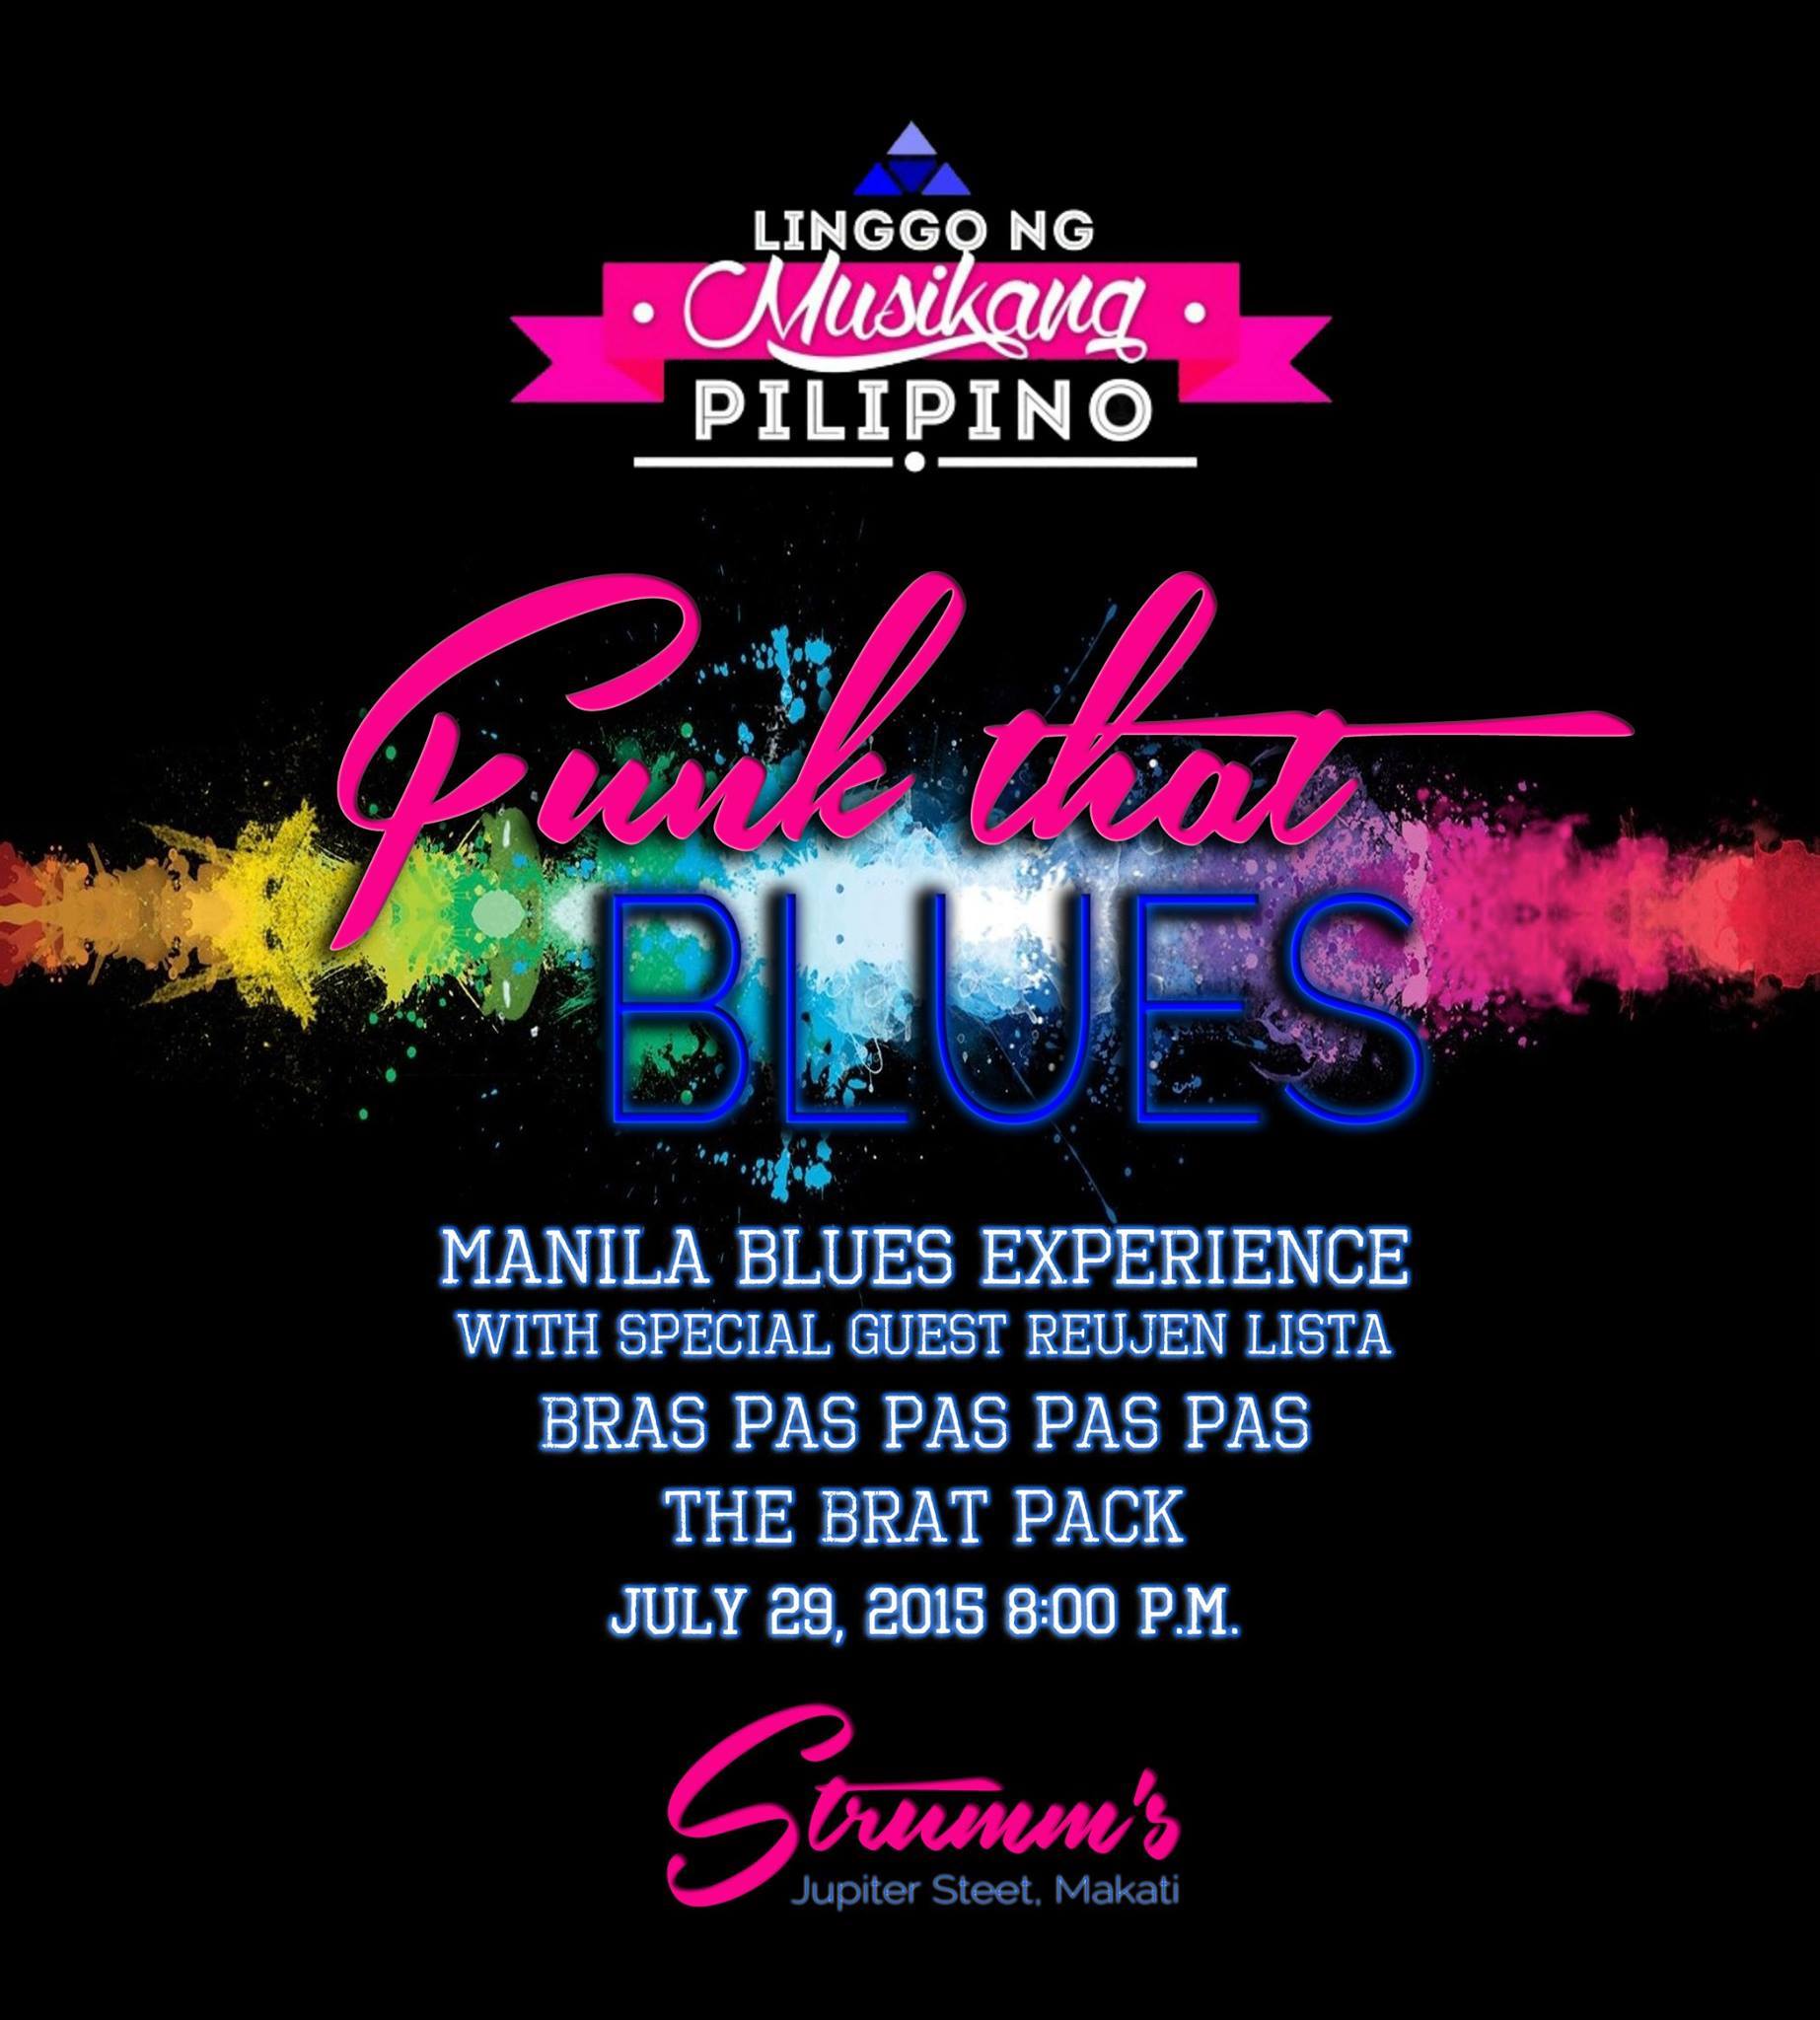 OPM - Organisasyon ng mga Pilipinong Mang-Aawit Don't miss this chance to funk your night up with the Manila Blues Experience, Bras Pas Pas Pas Pas and The Brat Pack on July 29 at 8.00pm, Strumm's Jupiter St. Makati! #PalakasinAngBosesNgOPM #LinggoNgMusikangPilipino